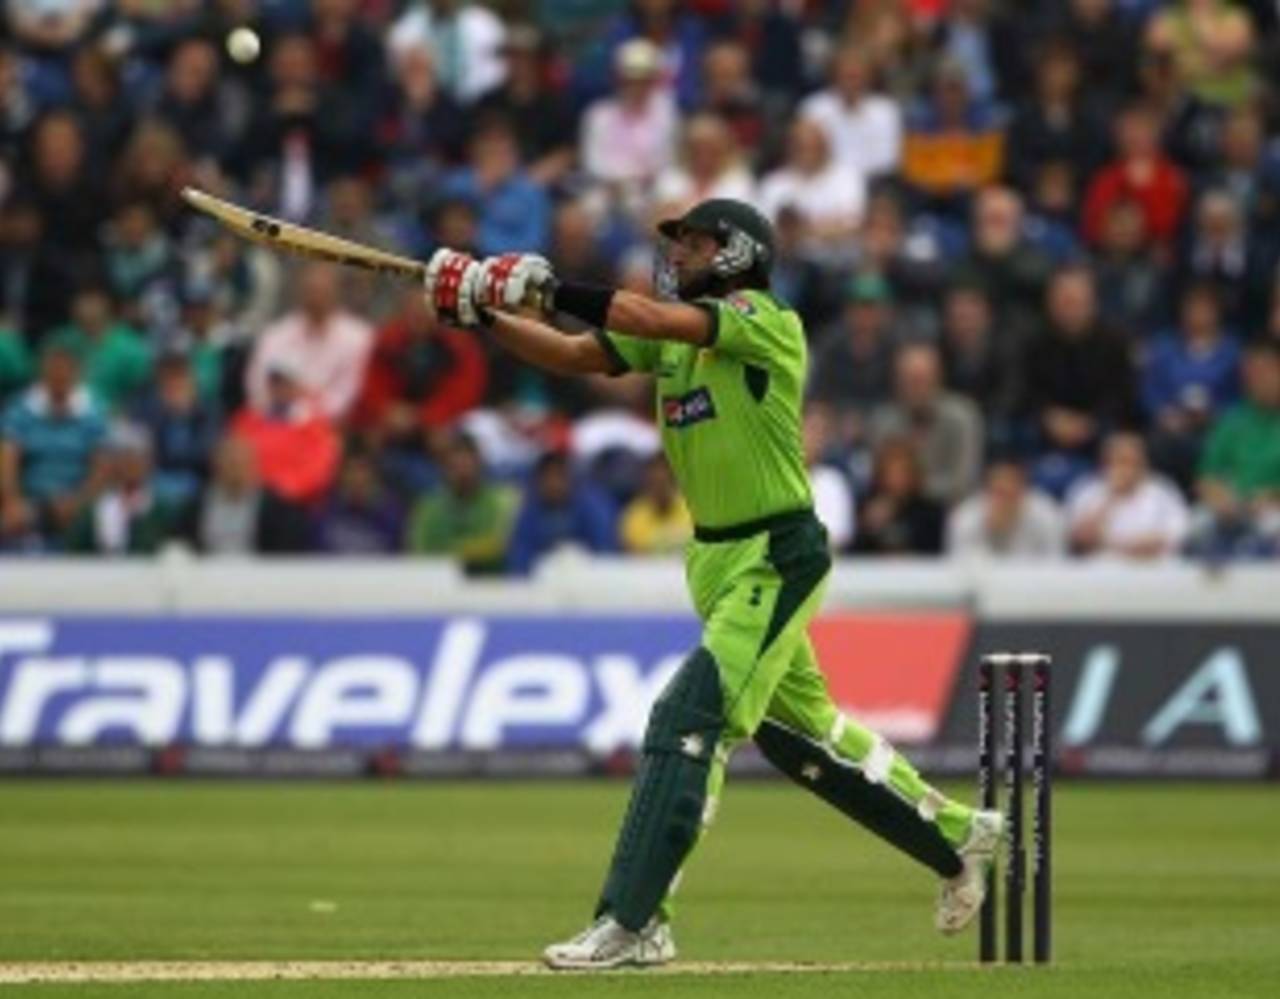 Even Shahid Afridi struggled to find the boundary, England v Pakistan, 1st T20I, Cardiff, September 5, 2010